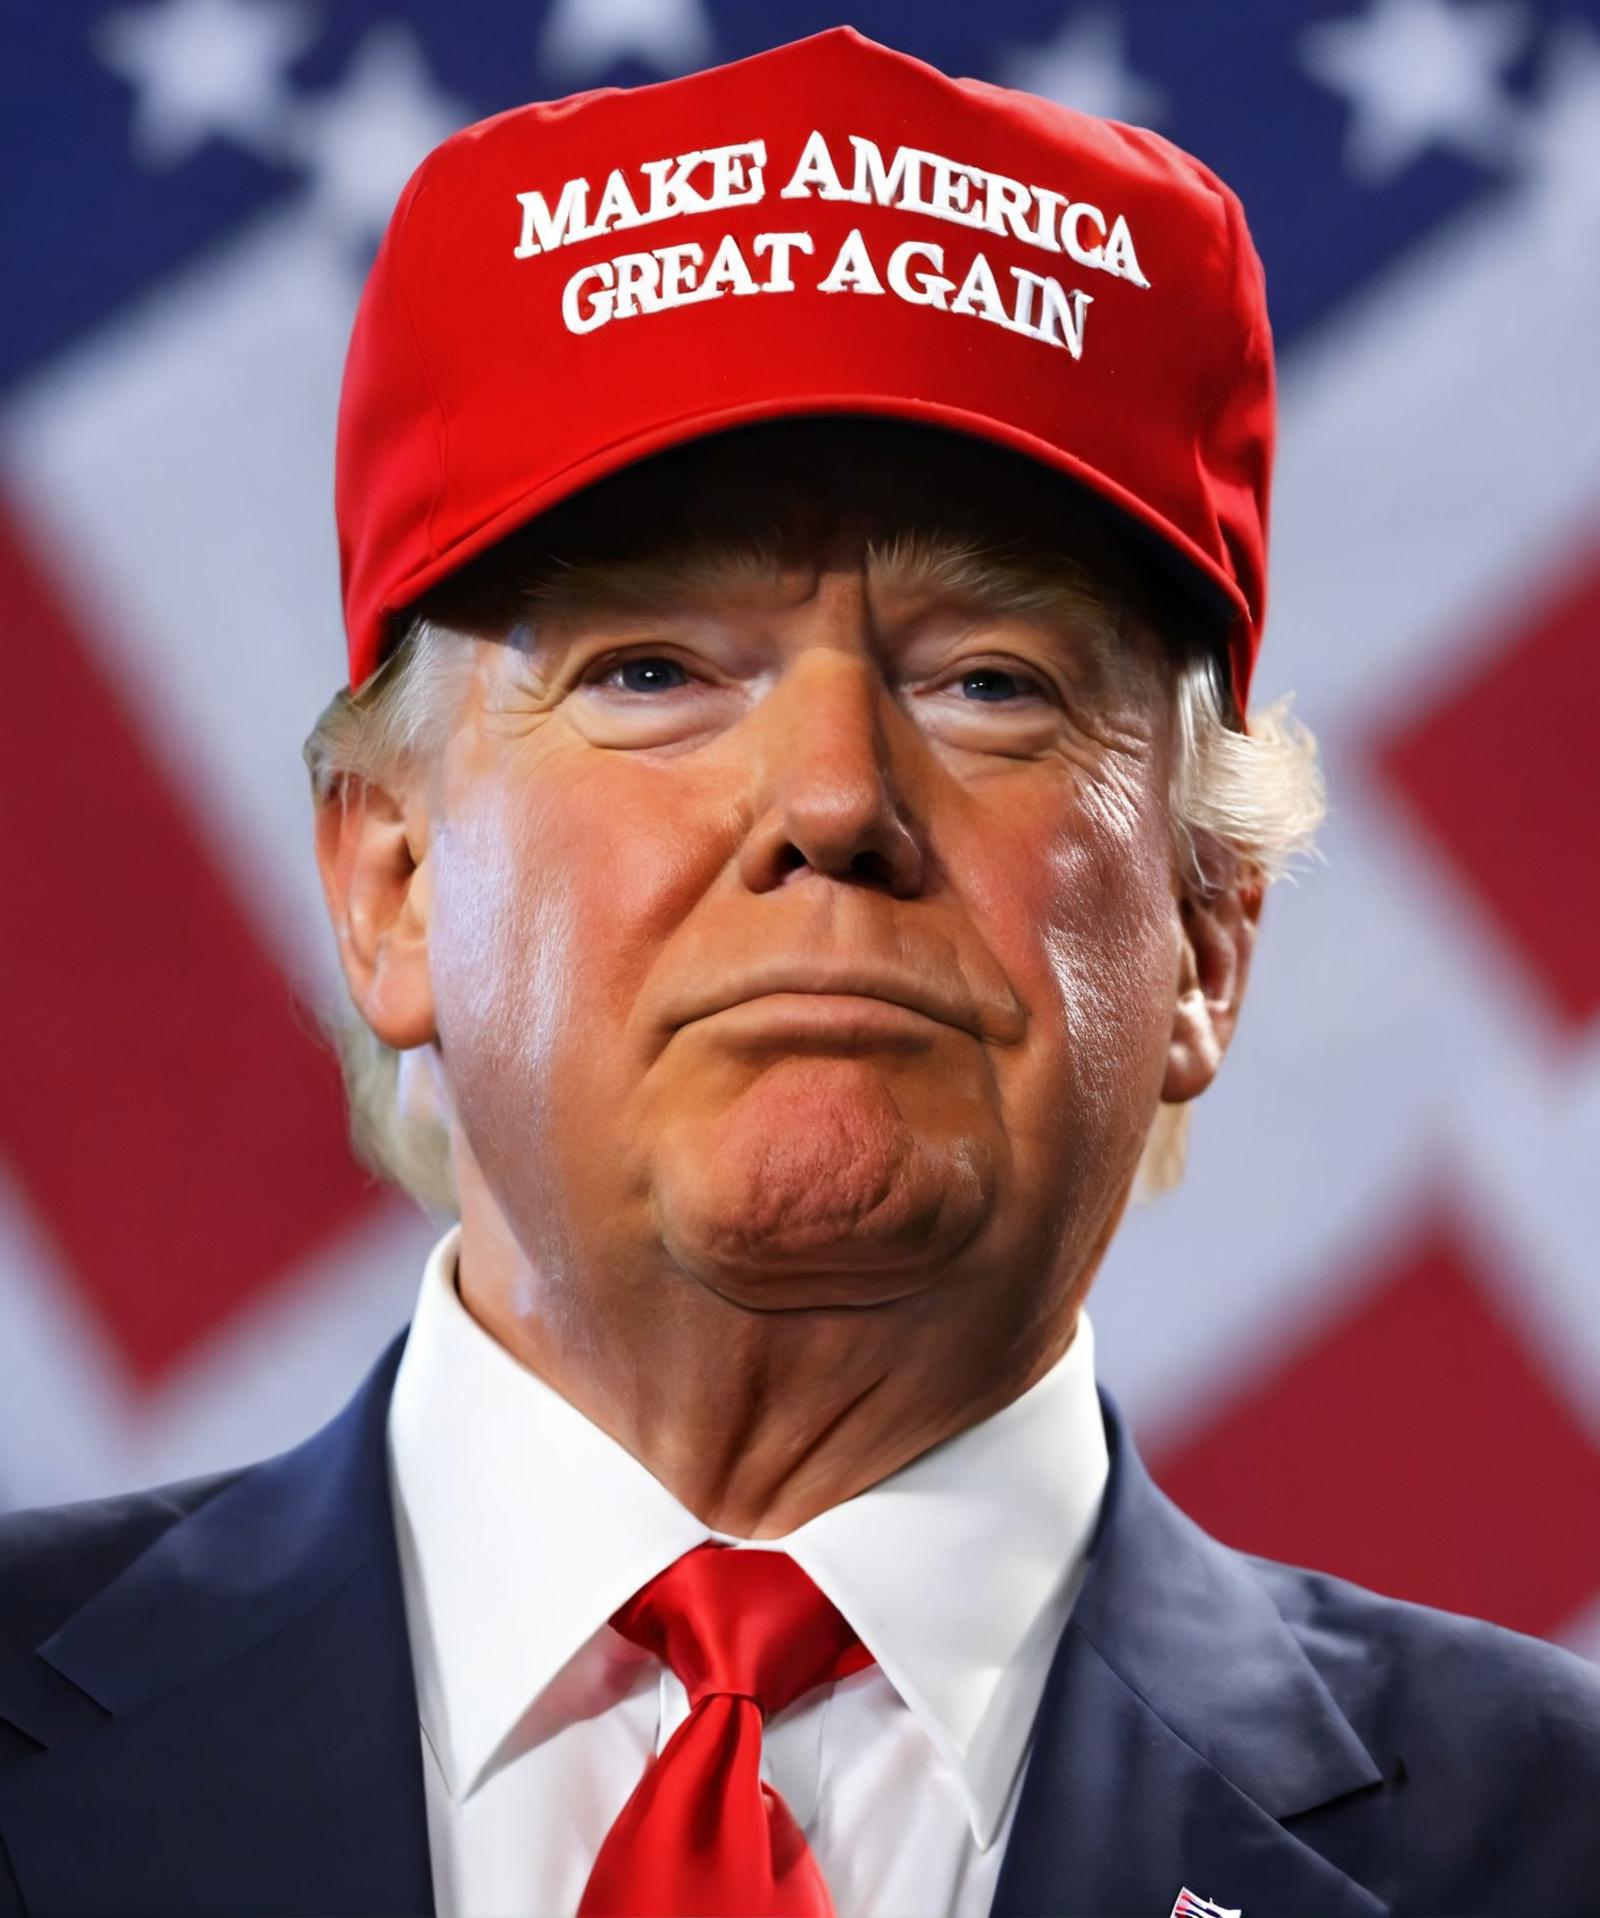 President Trump in a red Make America Great Again hat.